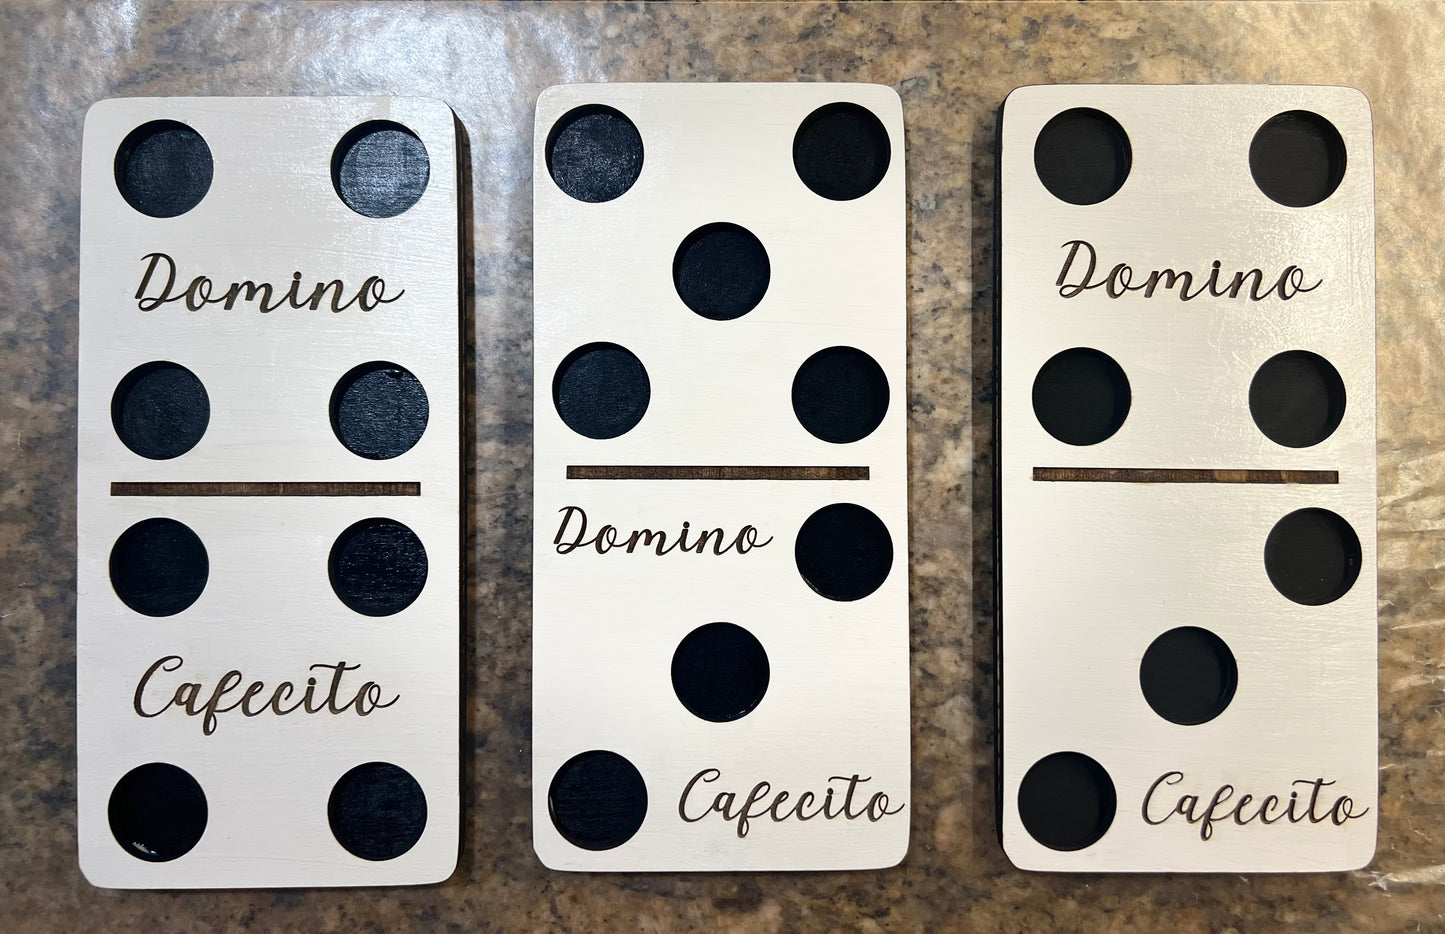 Domino Cafecito Tray (The Original)